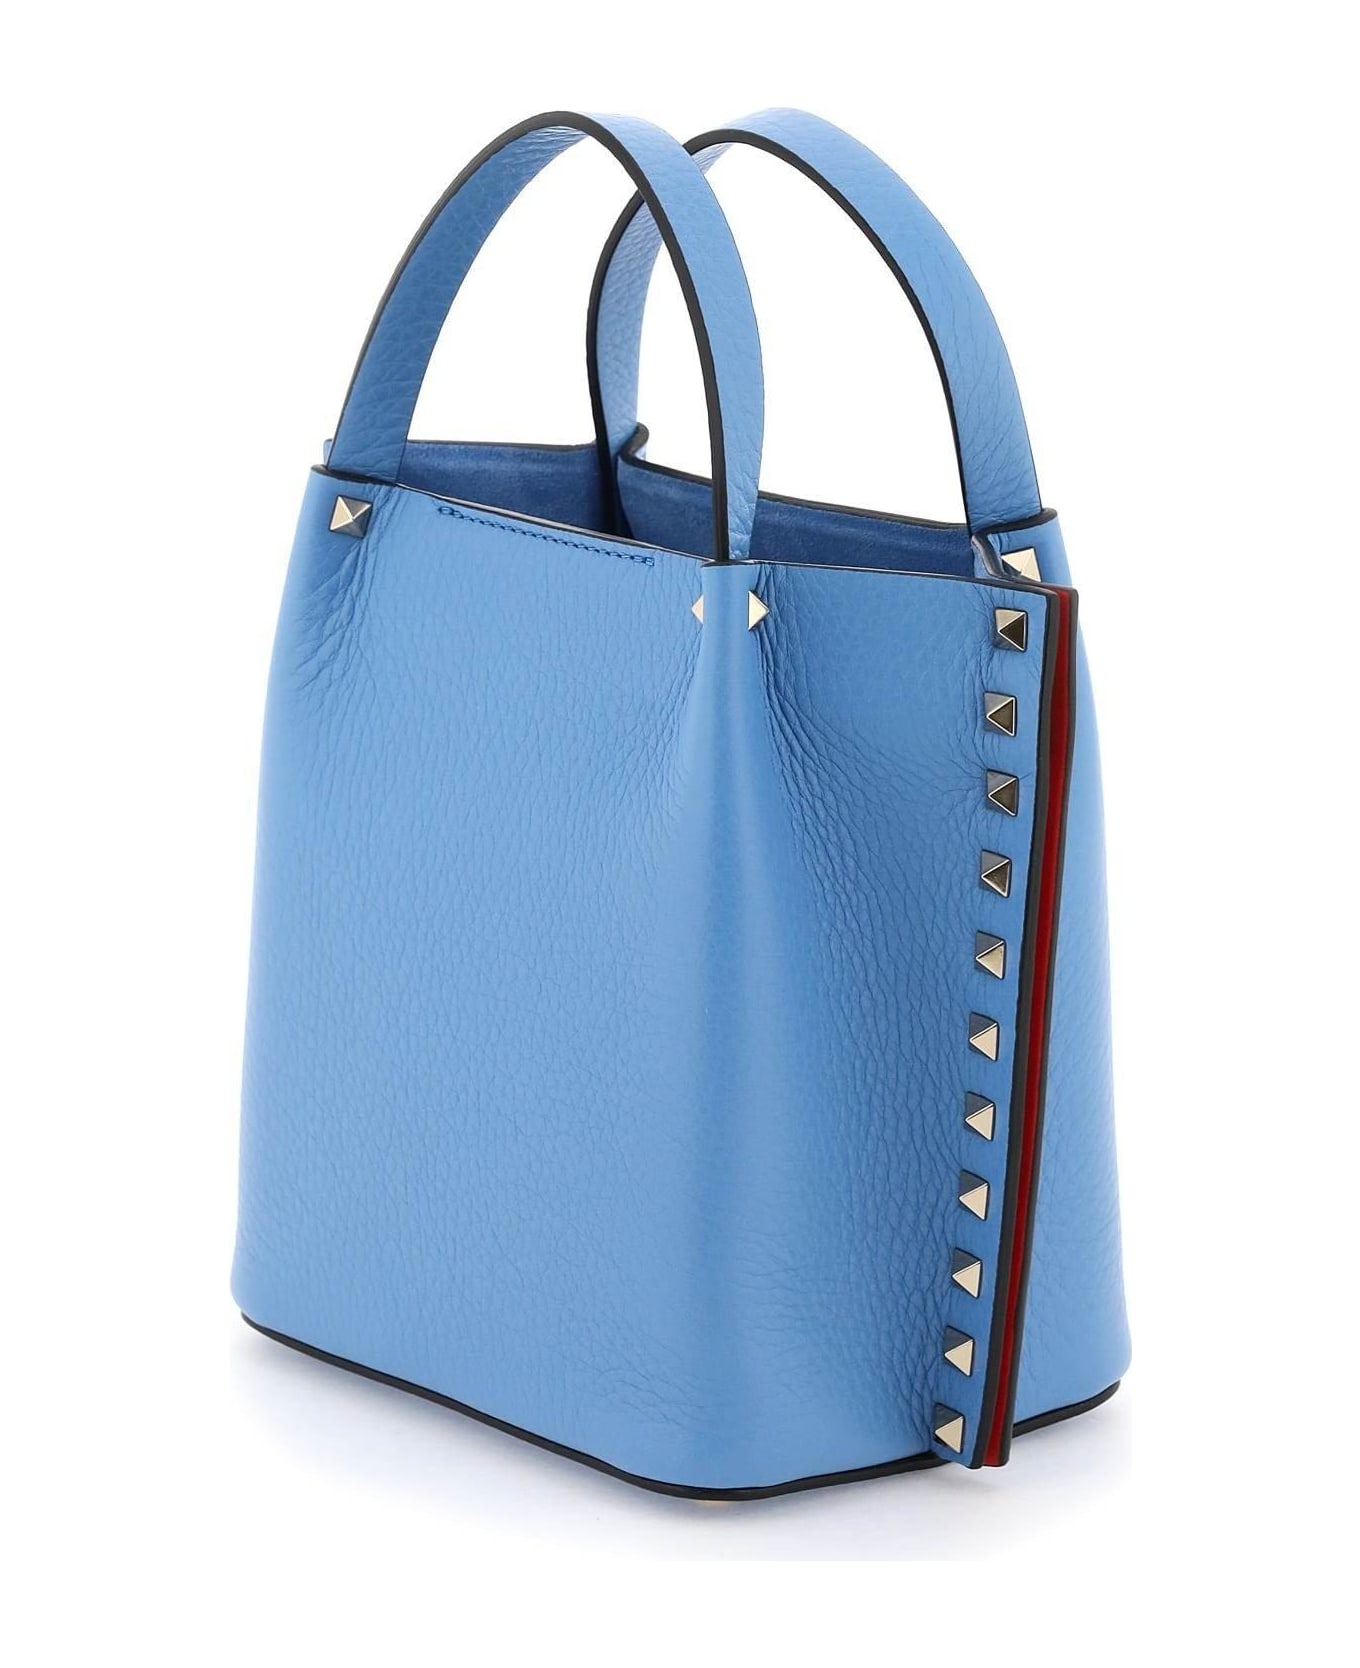 Valentino Garavani Garavani Rockstud Top Handle Bag - Blu